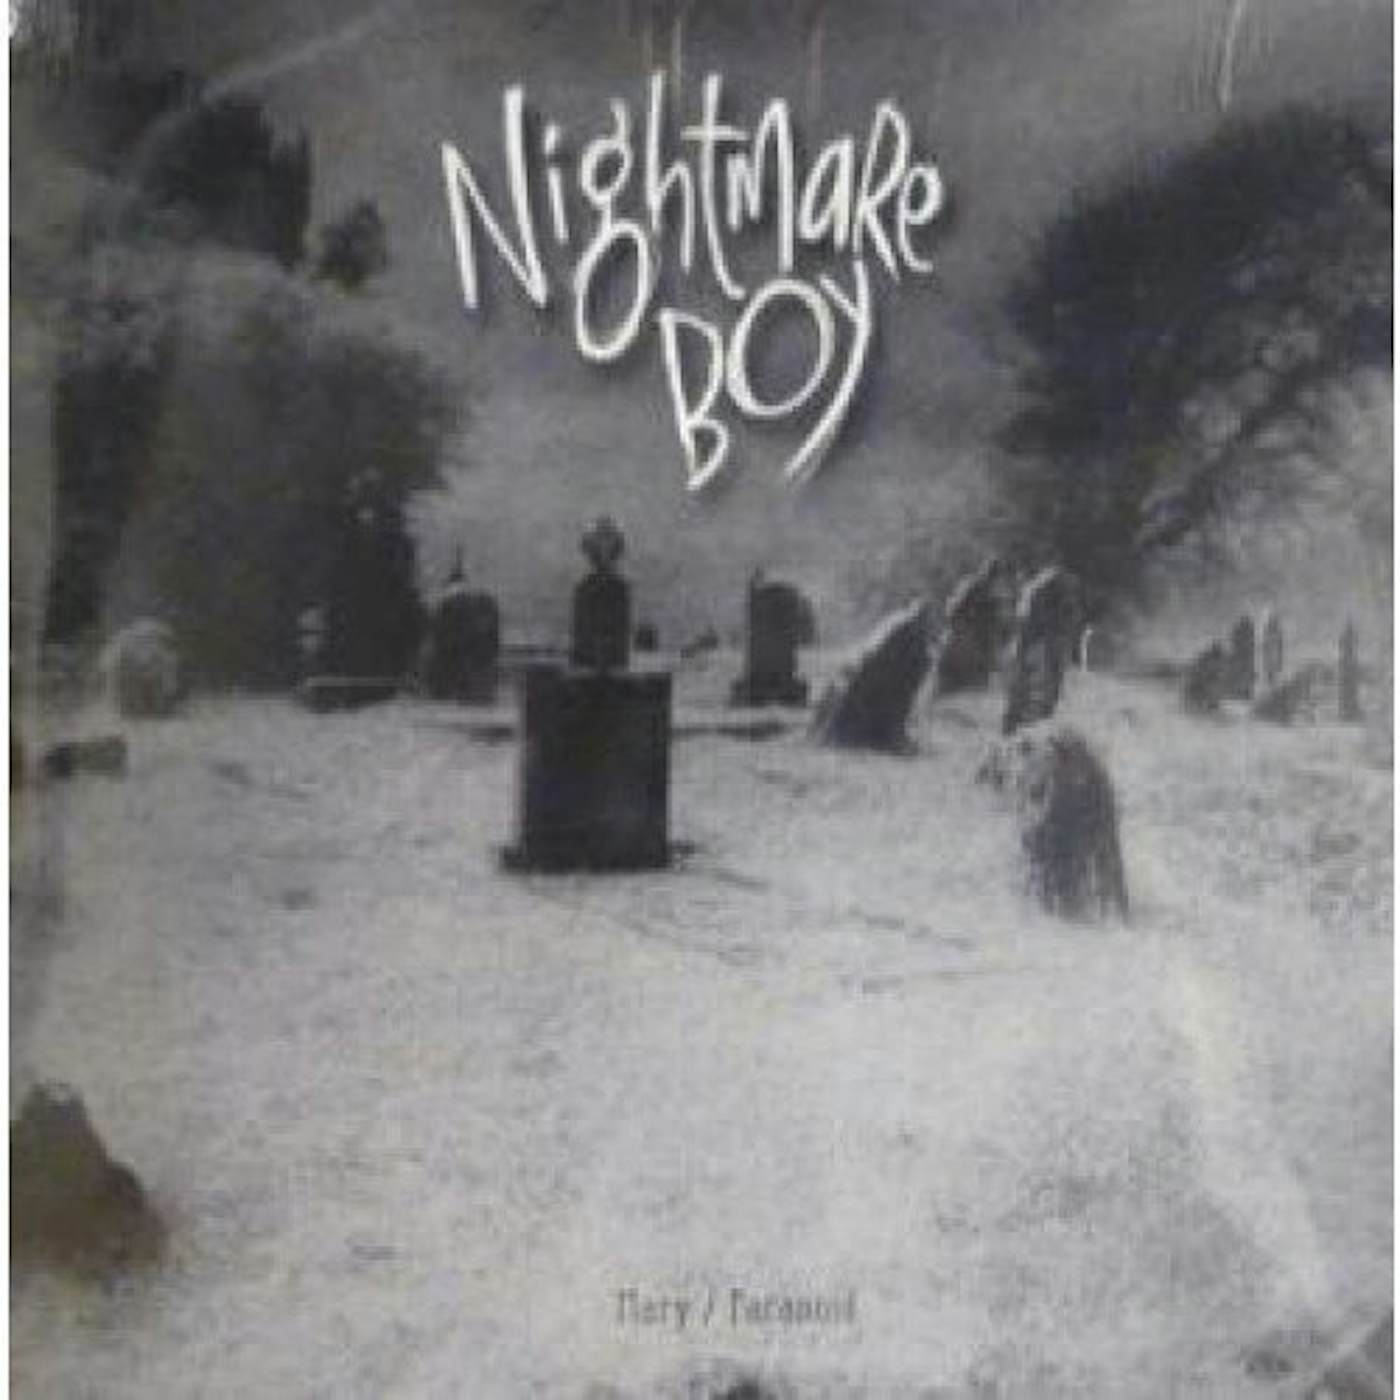 Nightmare Boy MARY/PARANOID Vinyl Record